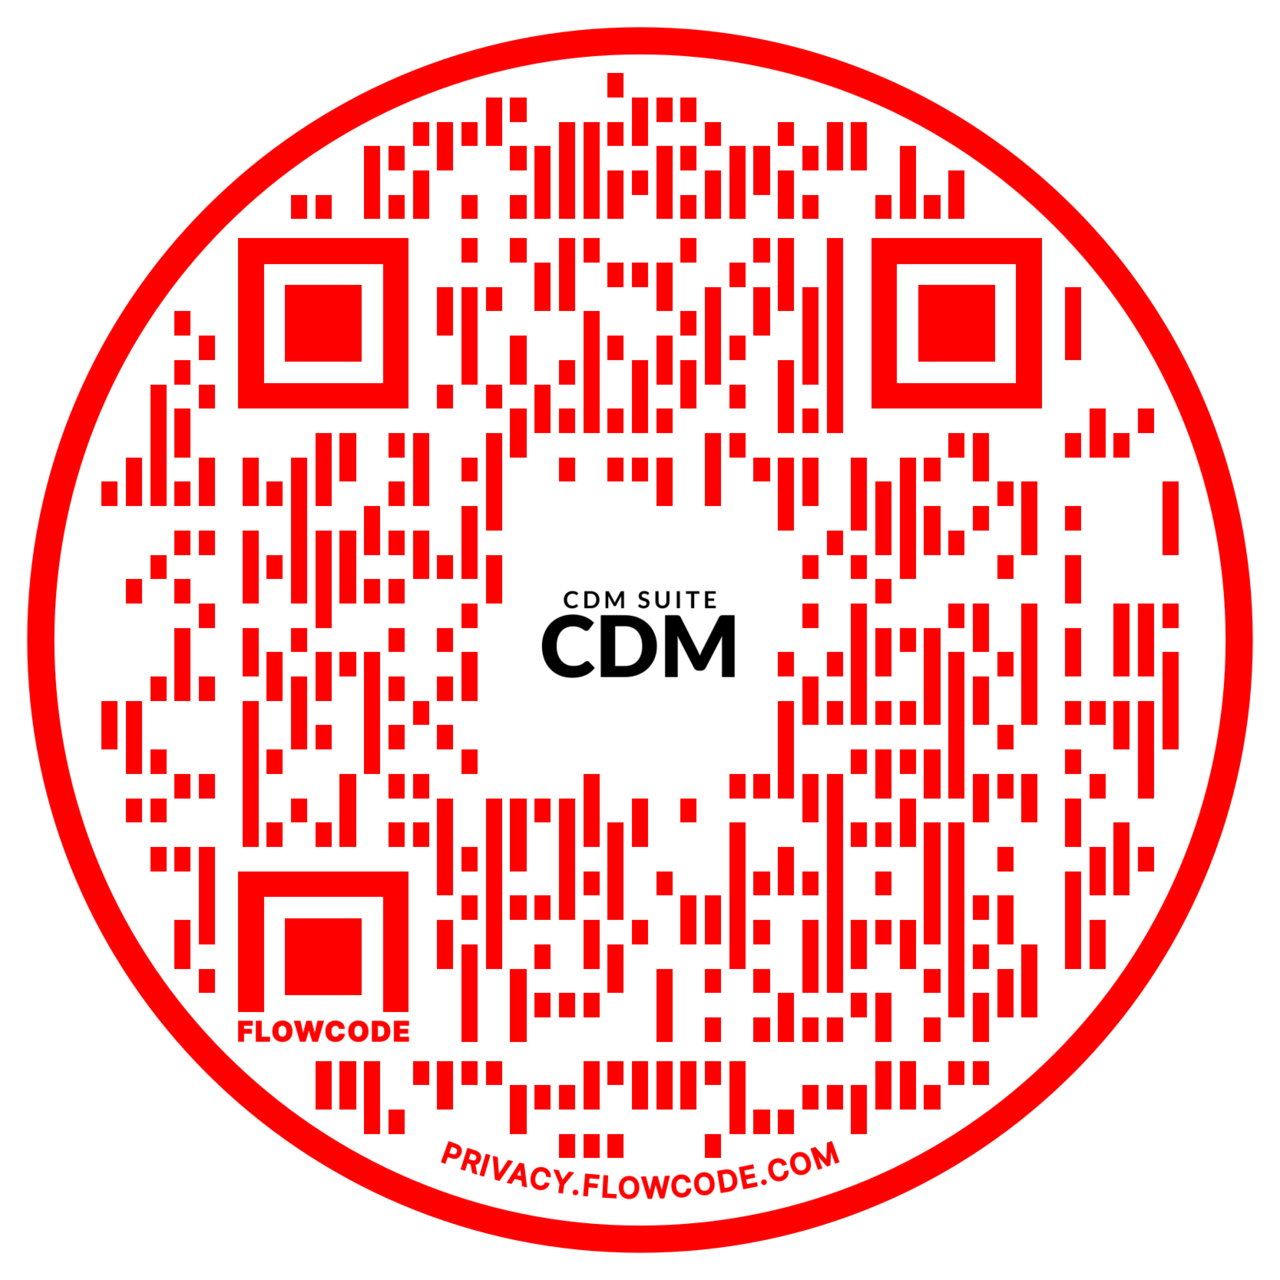 The Digital Marketing Insider by CDM Suite